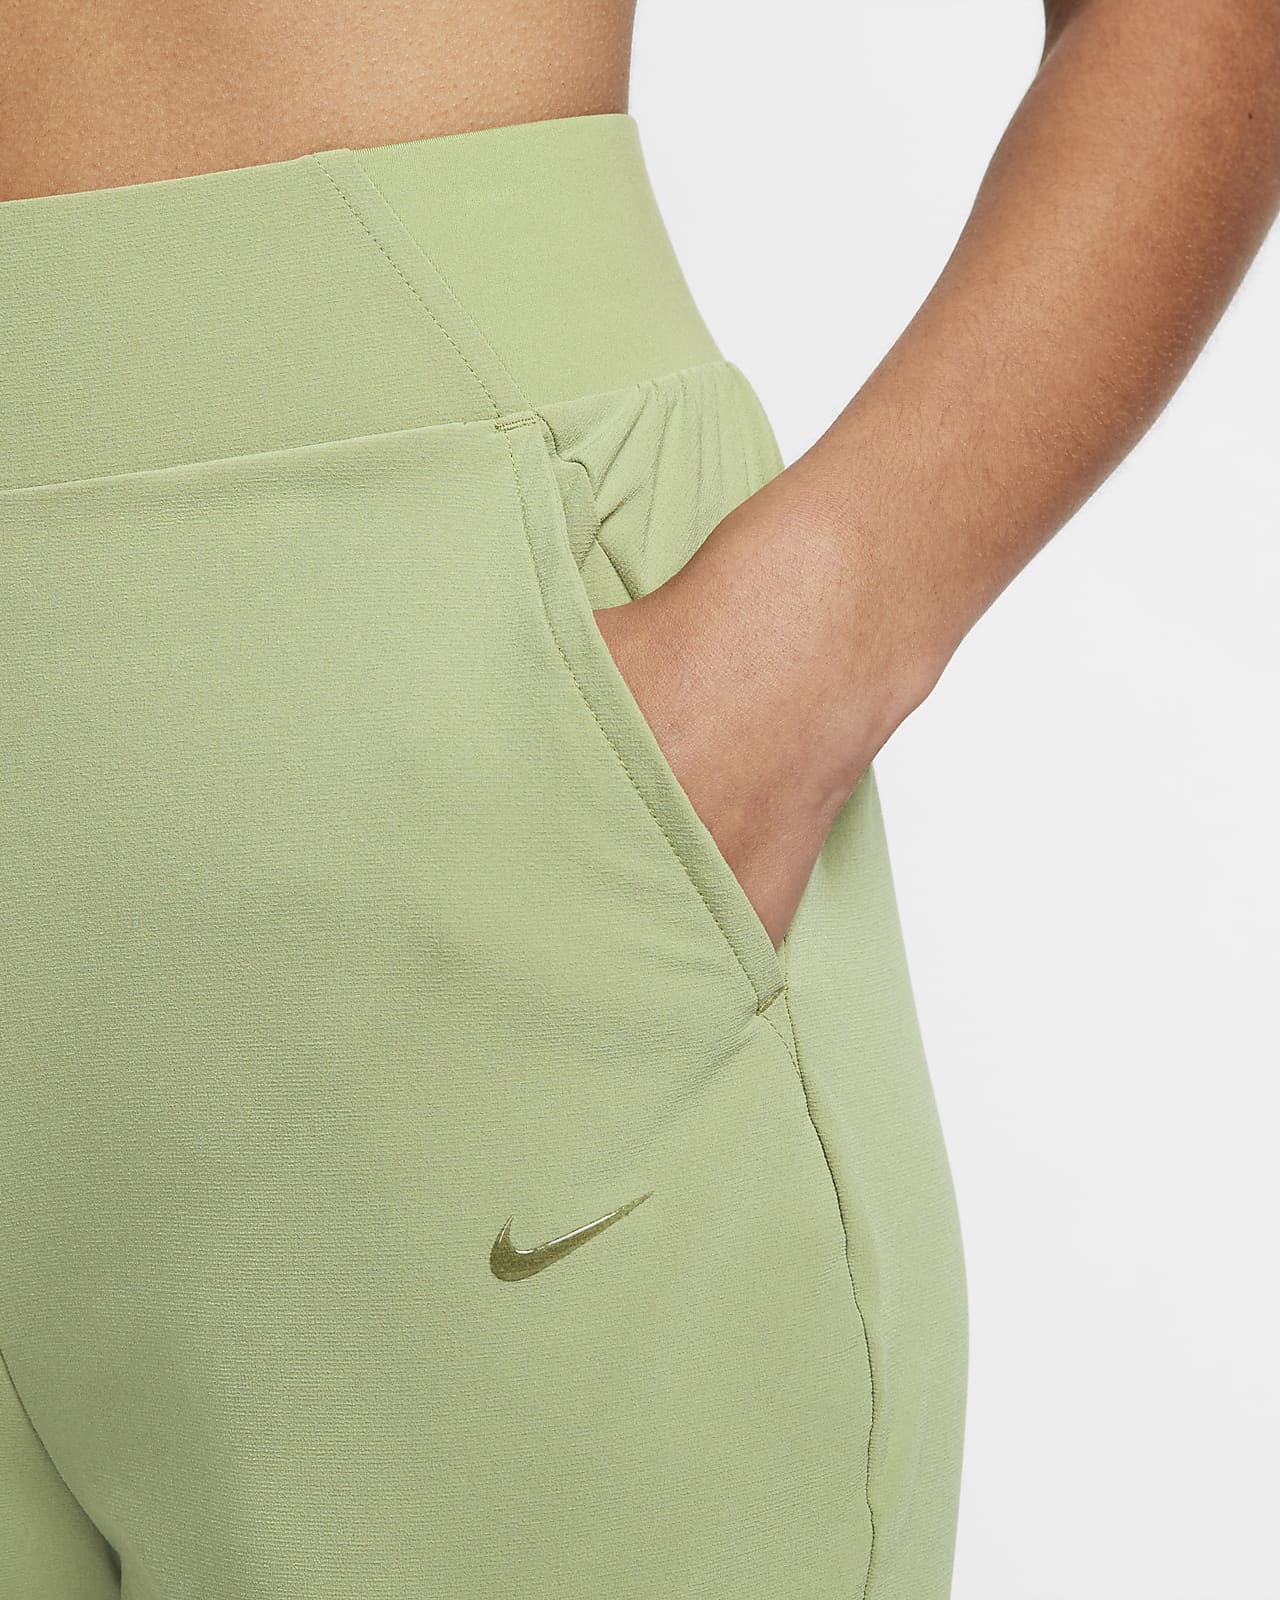 Bliss Women's Training Pants. Nike.com